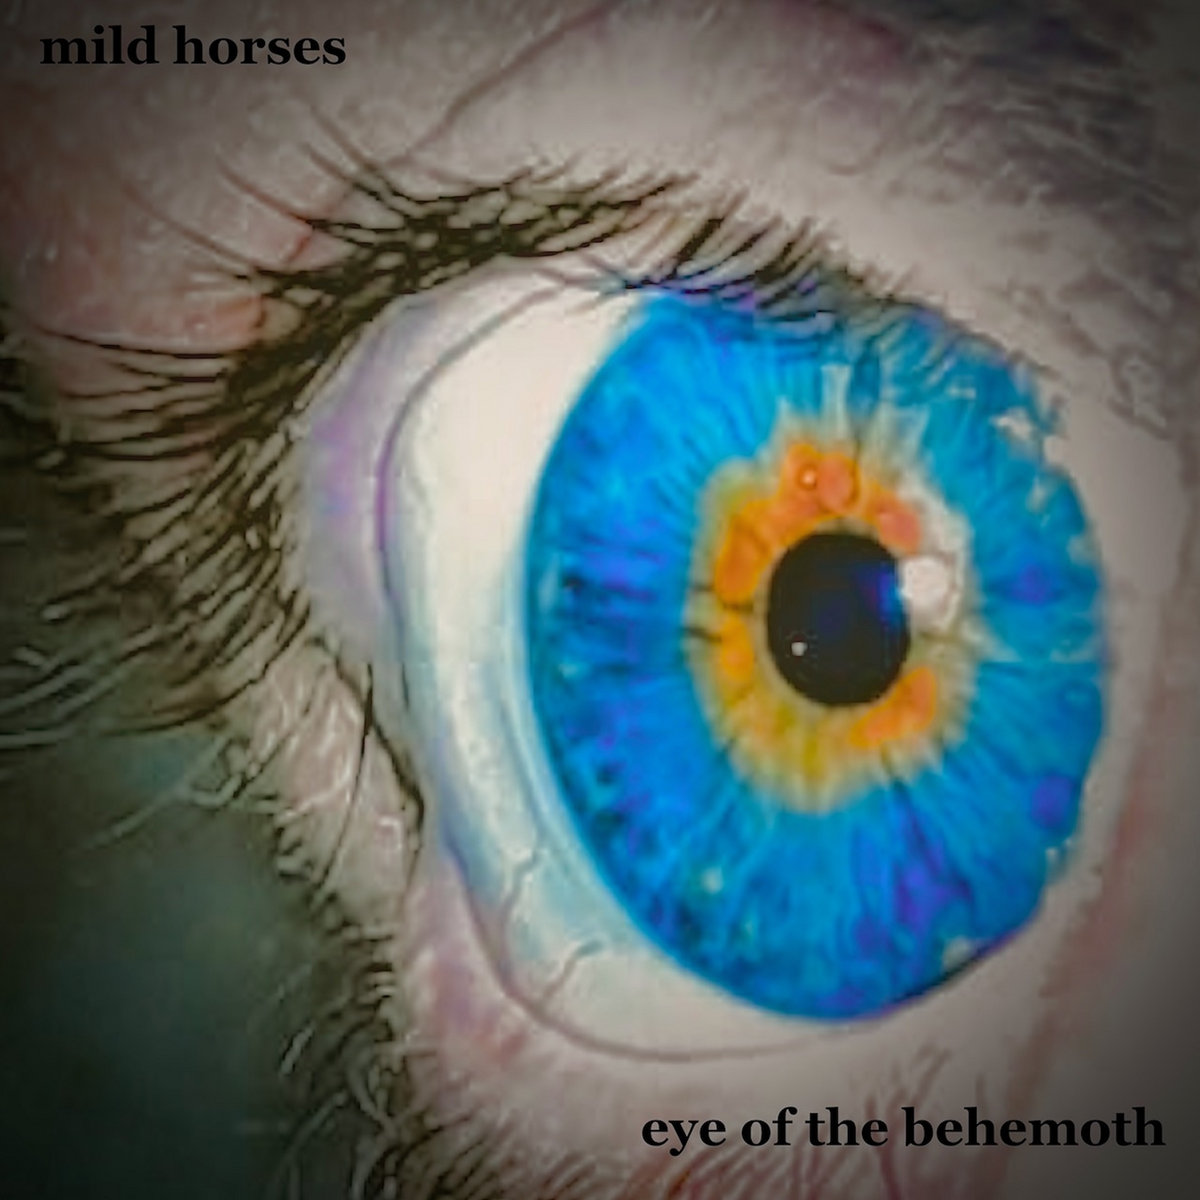 LISTEN: “Eye Of The Behemoth” by Mild Horses